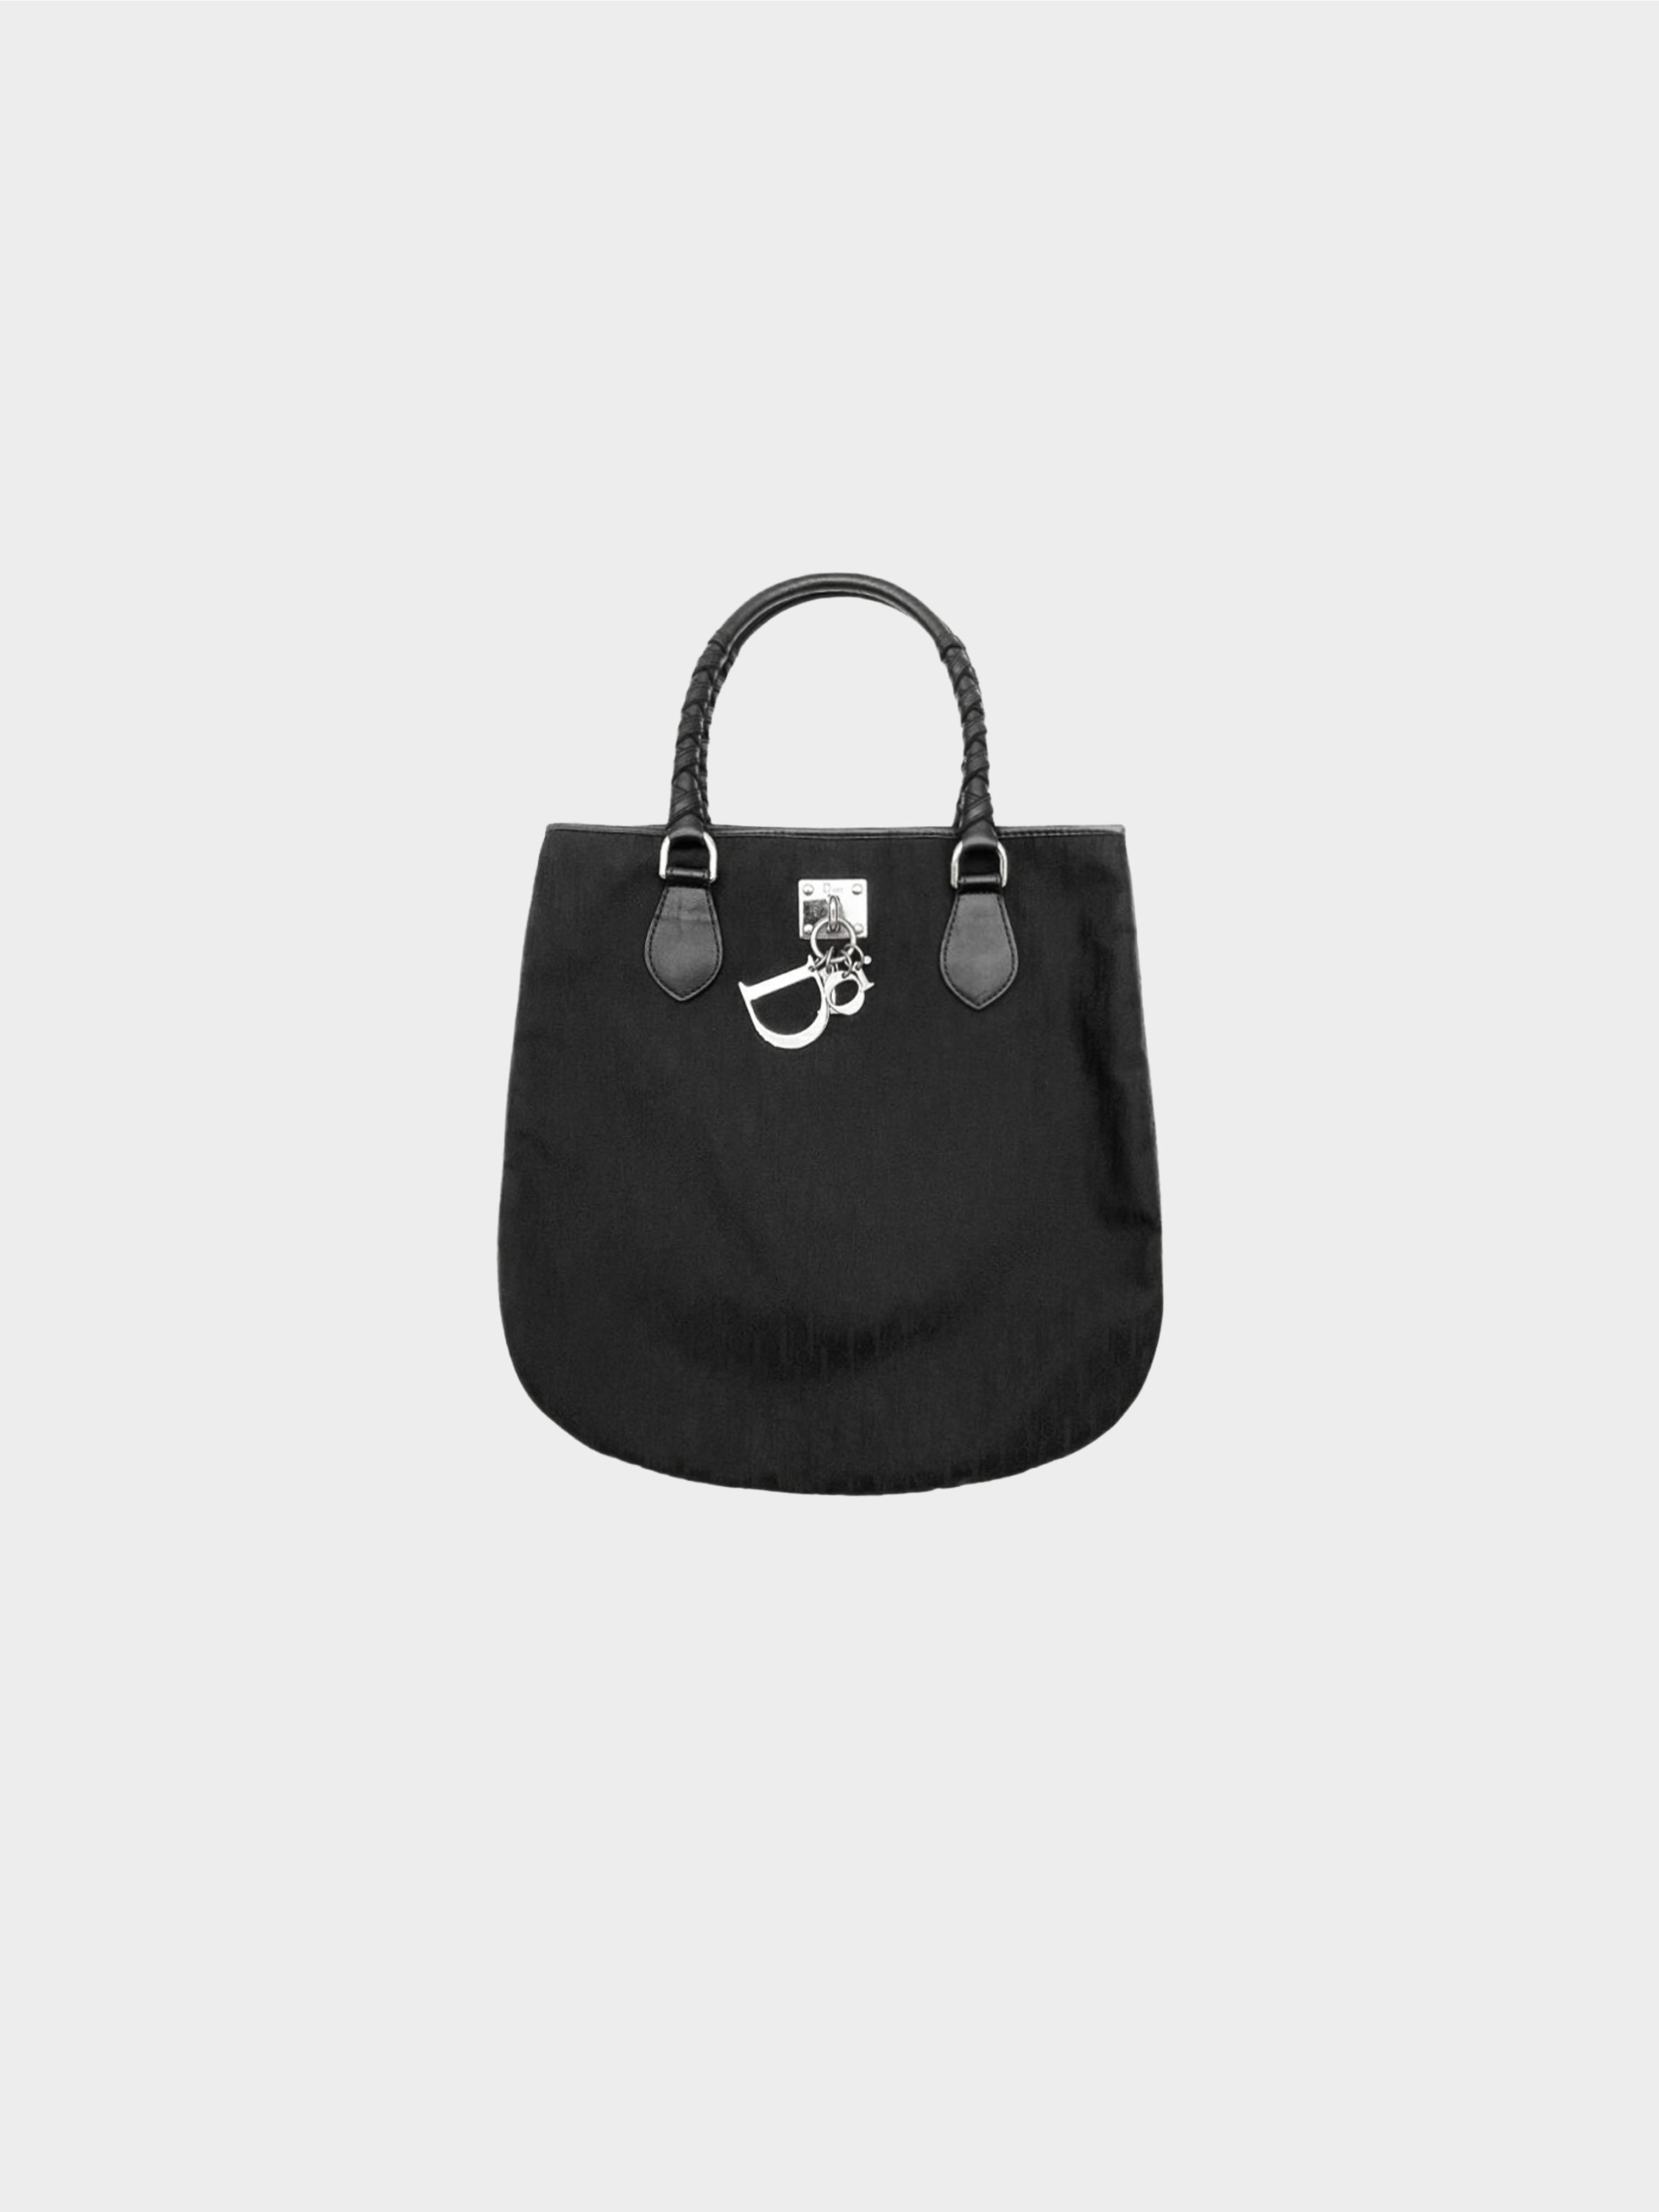 Christian Dior 2007 Black Trotter Tote Bag